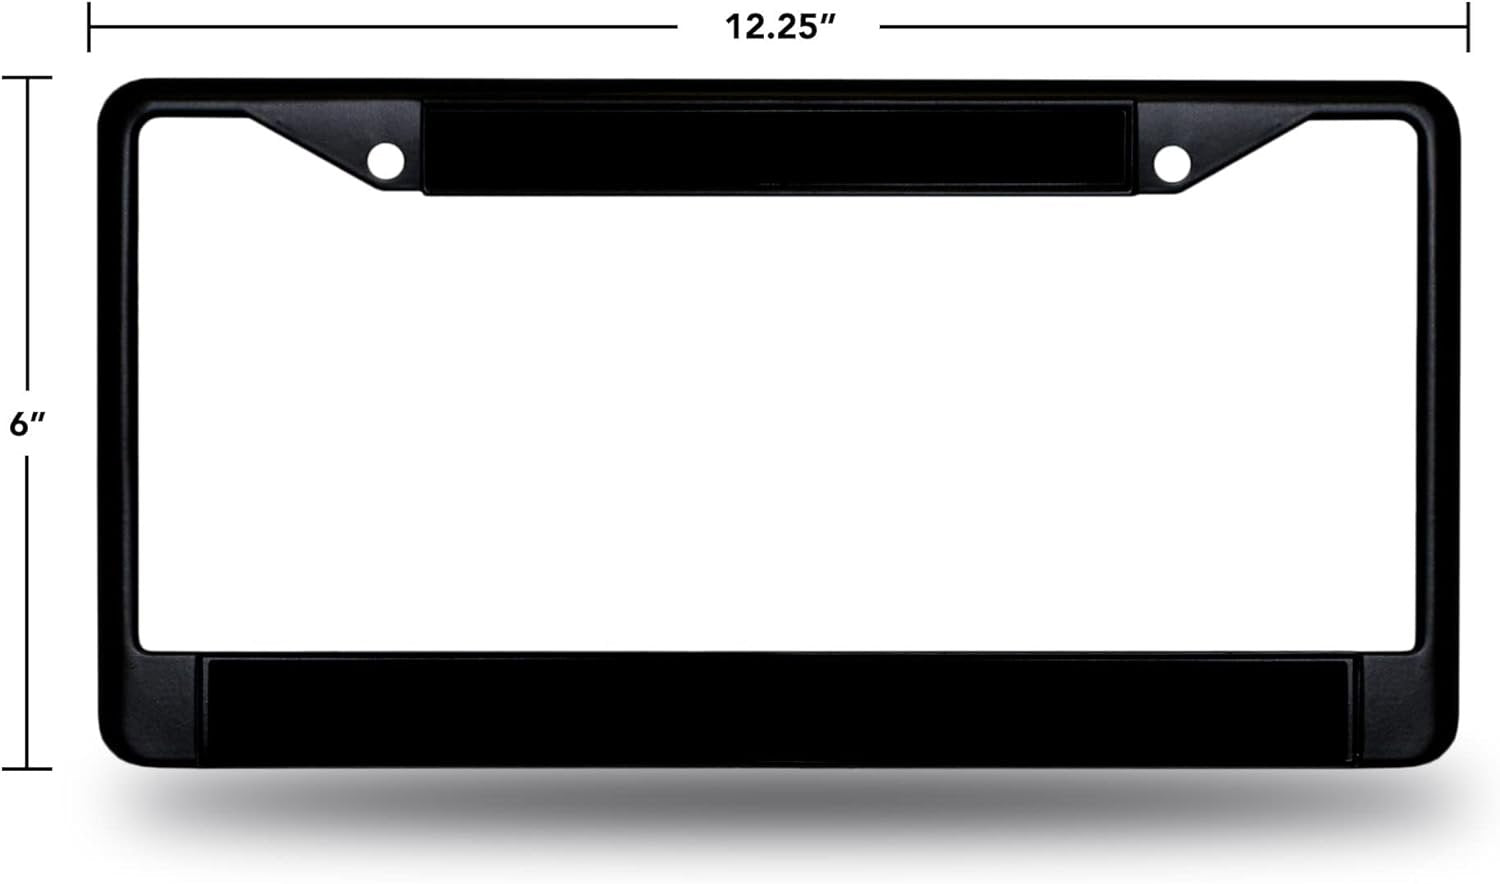 University of Nebraska Cornhuskers Black Metal License Plate Frame Chrome Tag Cover, 12x6 Inch